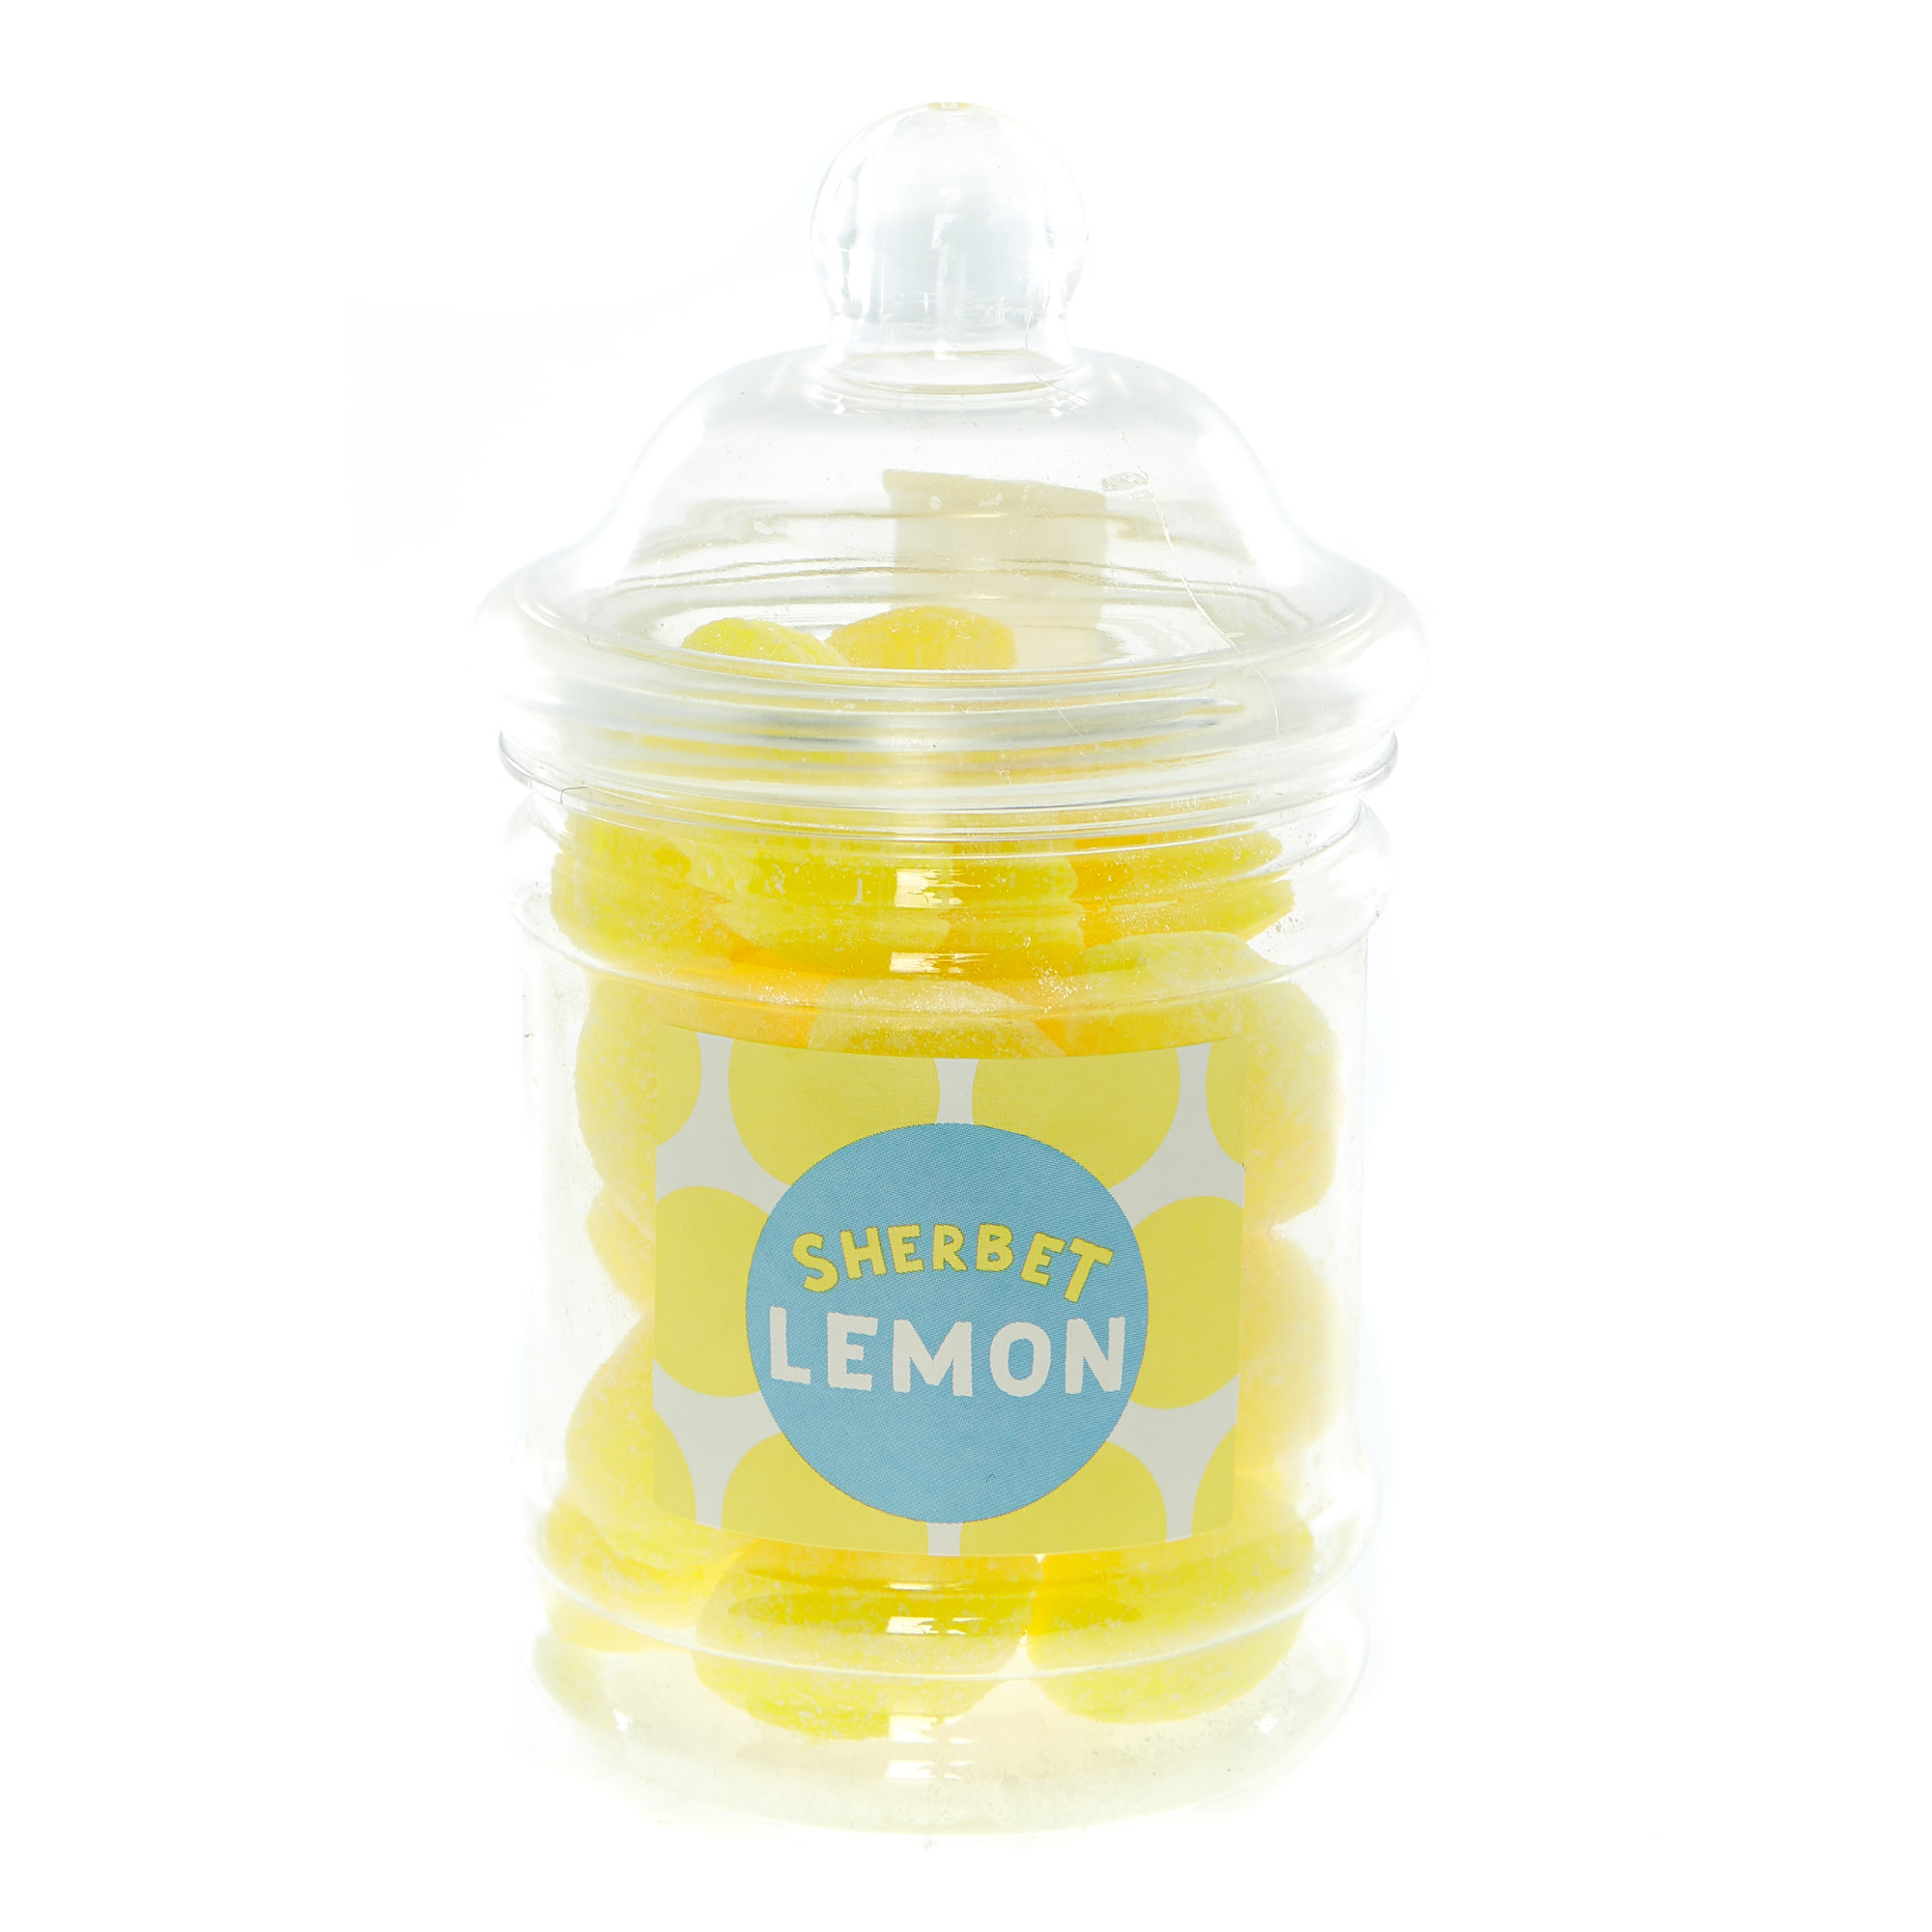 Sherbet Lemon Boiled Sweets In A Jar